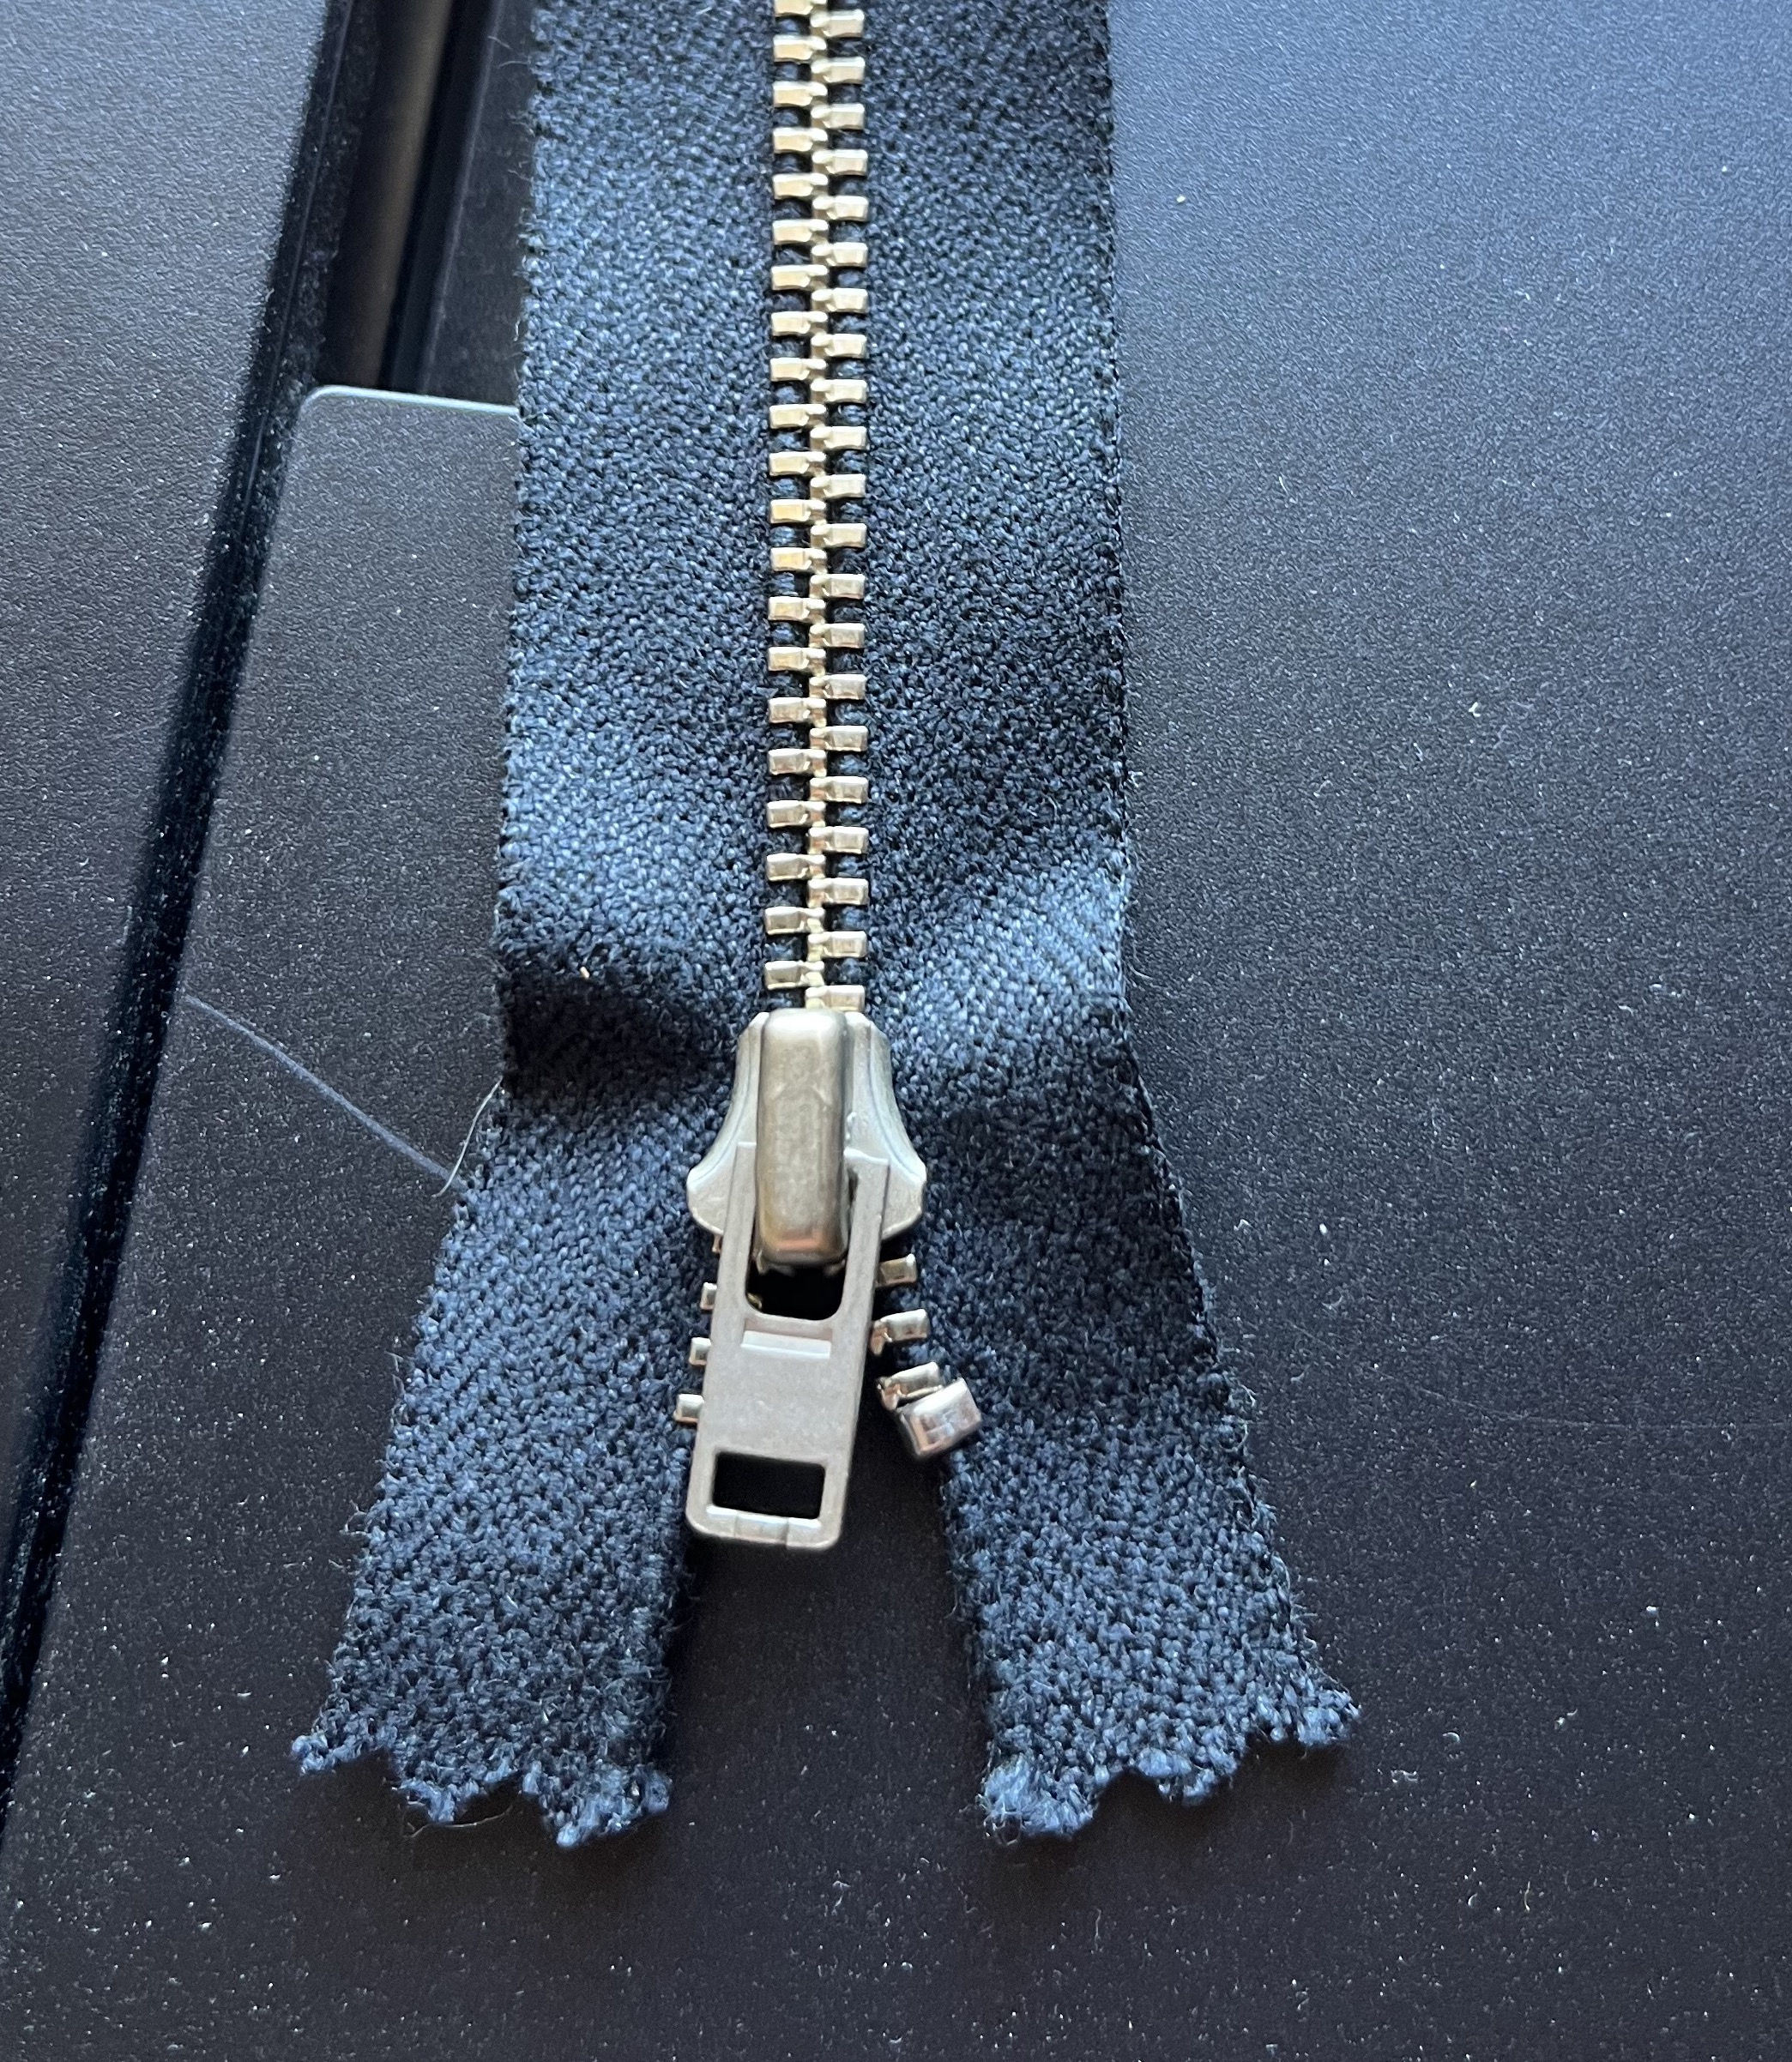 YKK Zipper <Universal®>#3 12 cm Gold (GSN84UNV8 Slider）